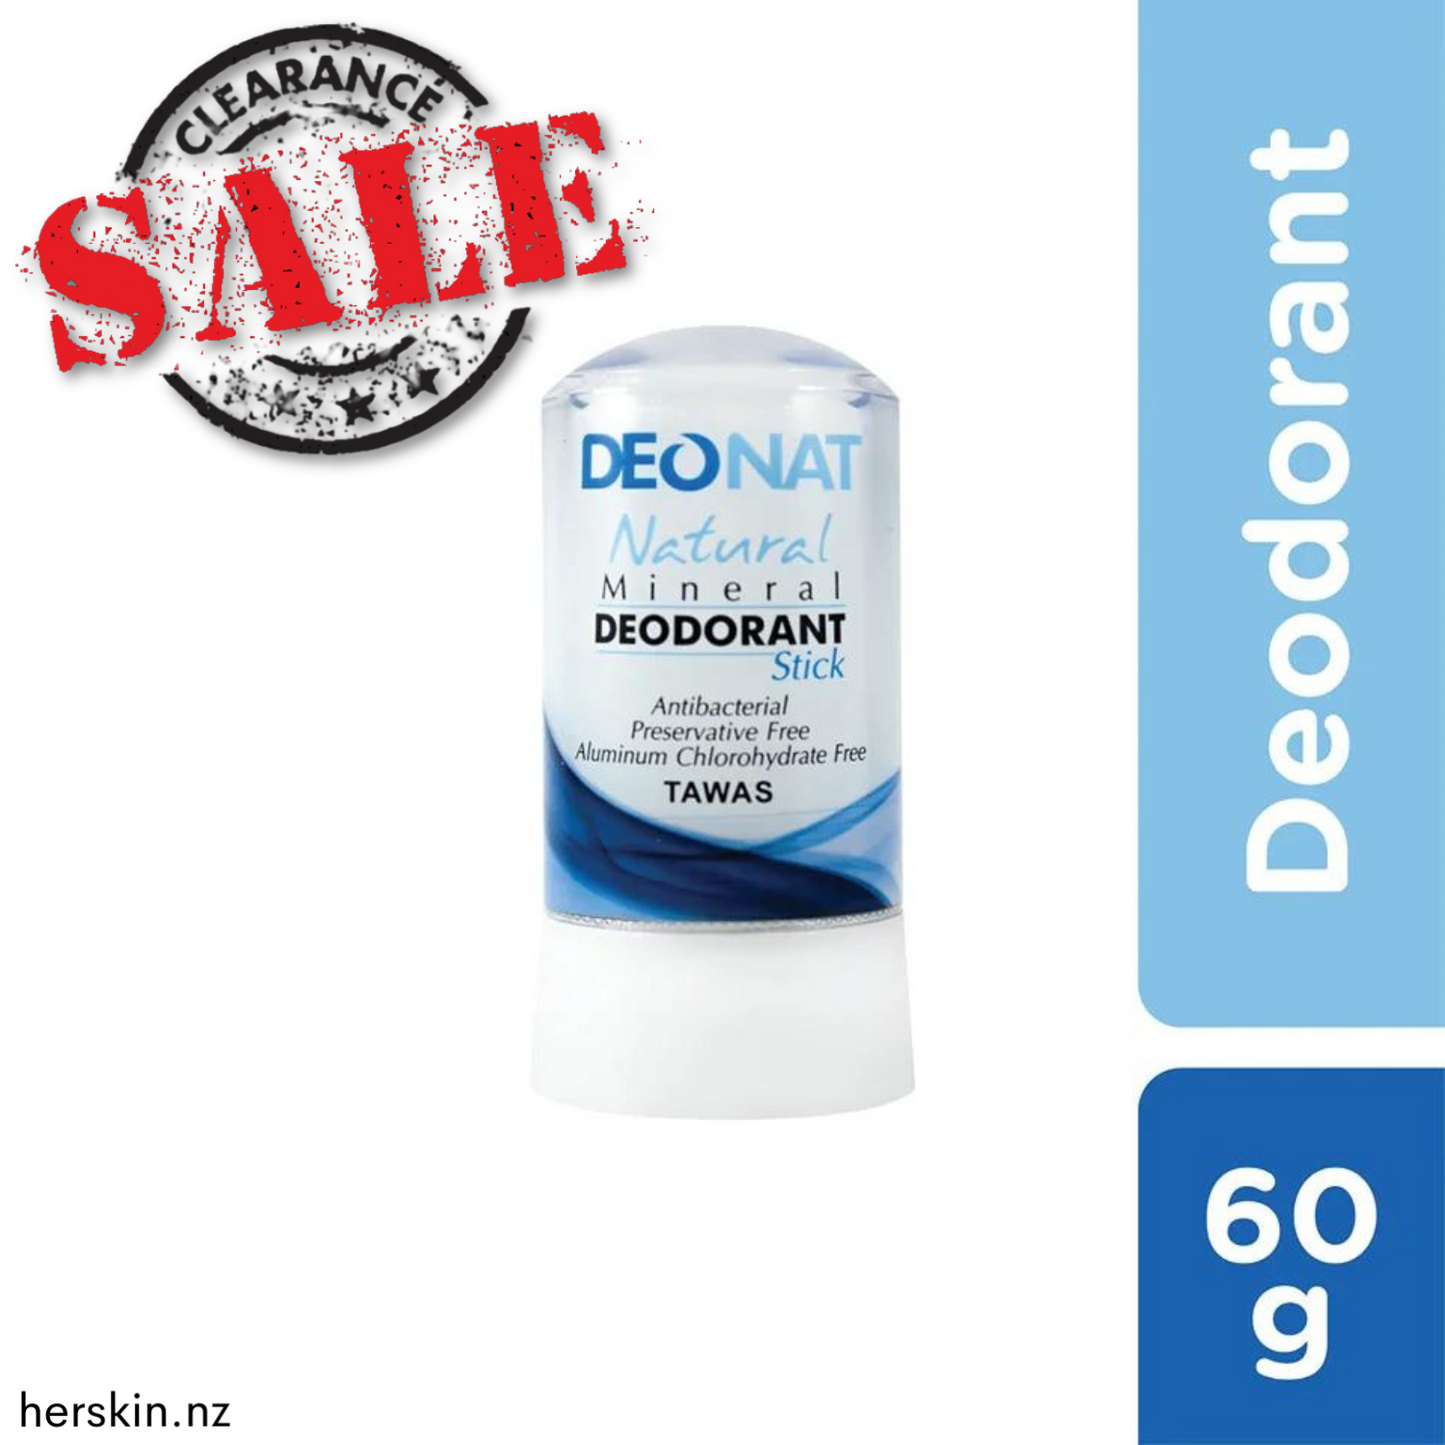 CLEARANCE - Deonat Mineral Deodorant Stick 60g - Natural